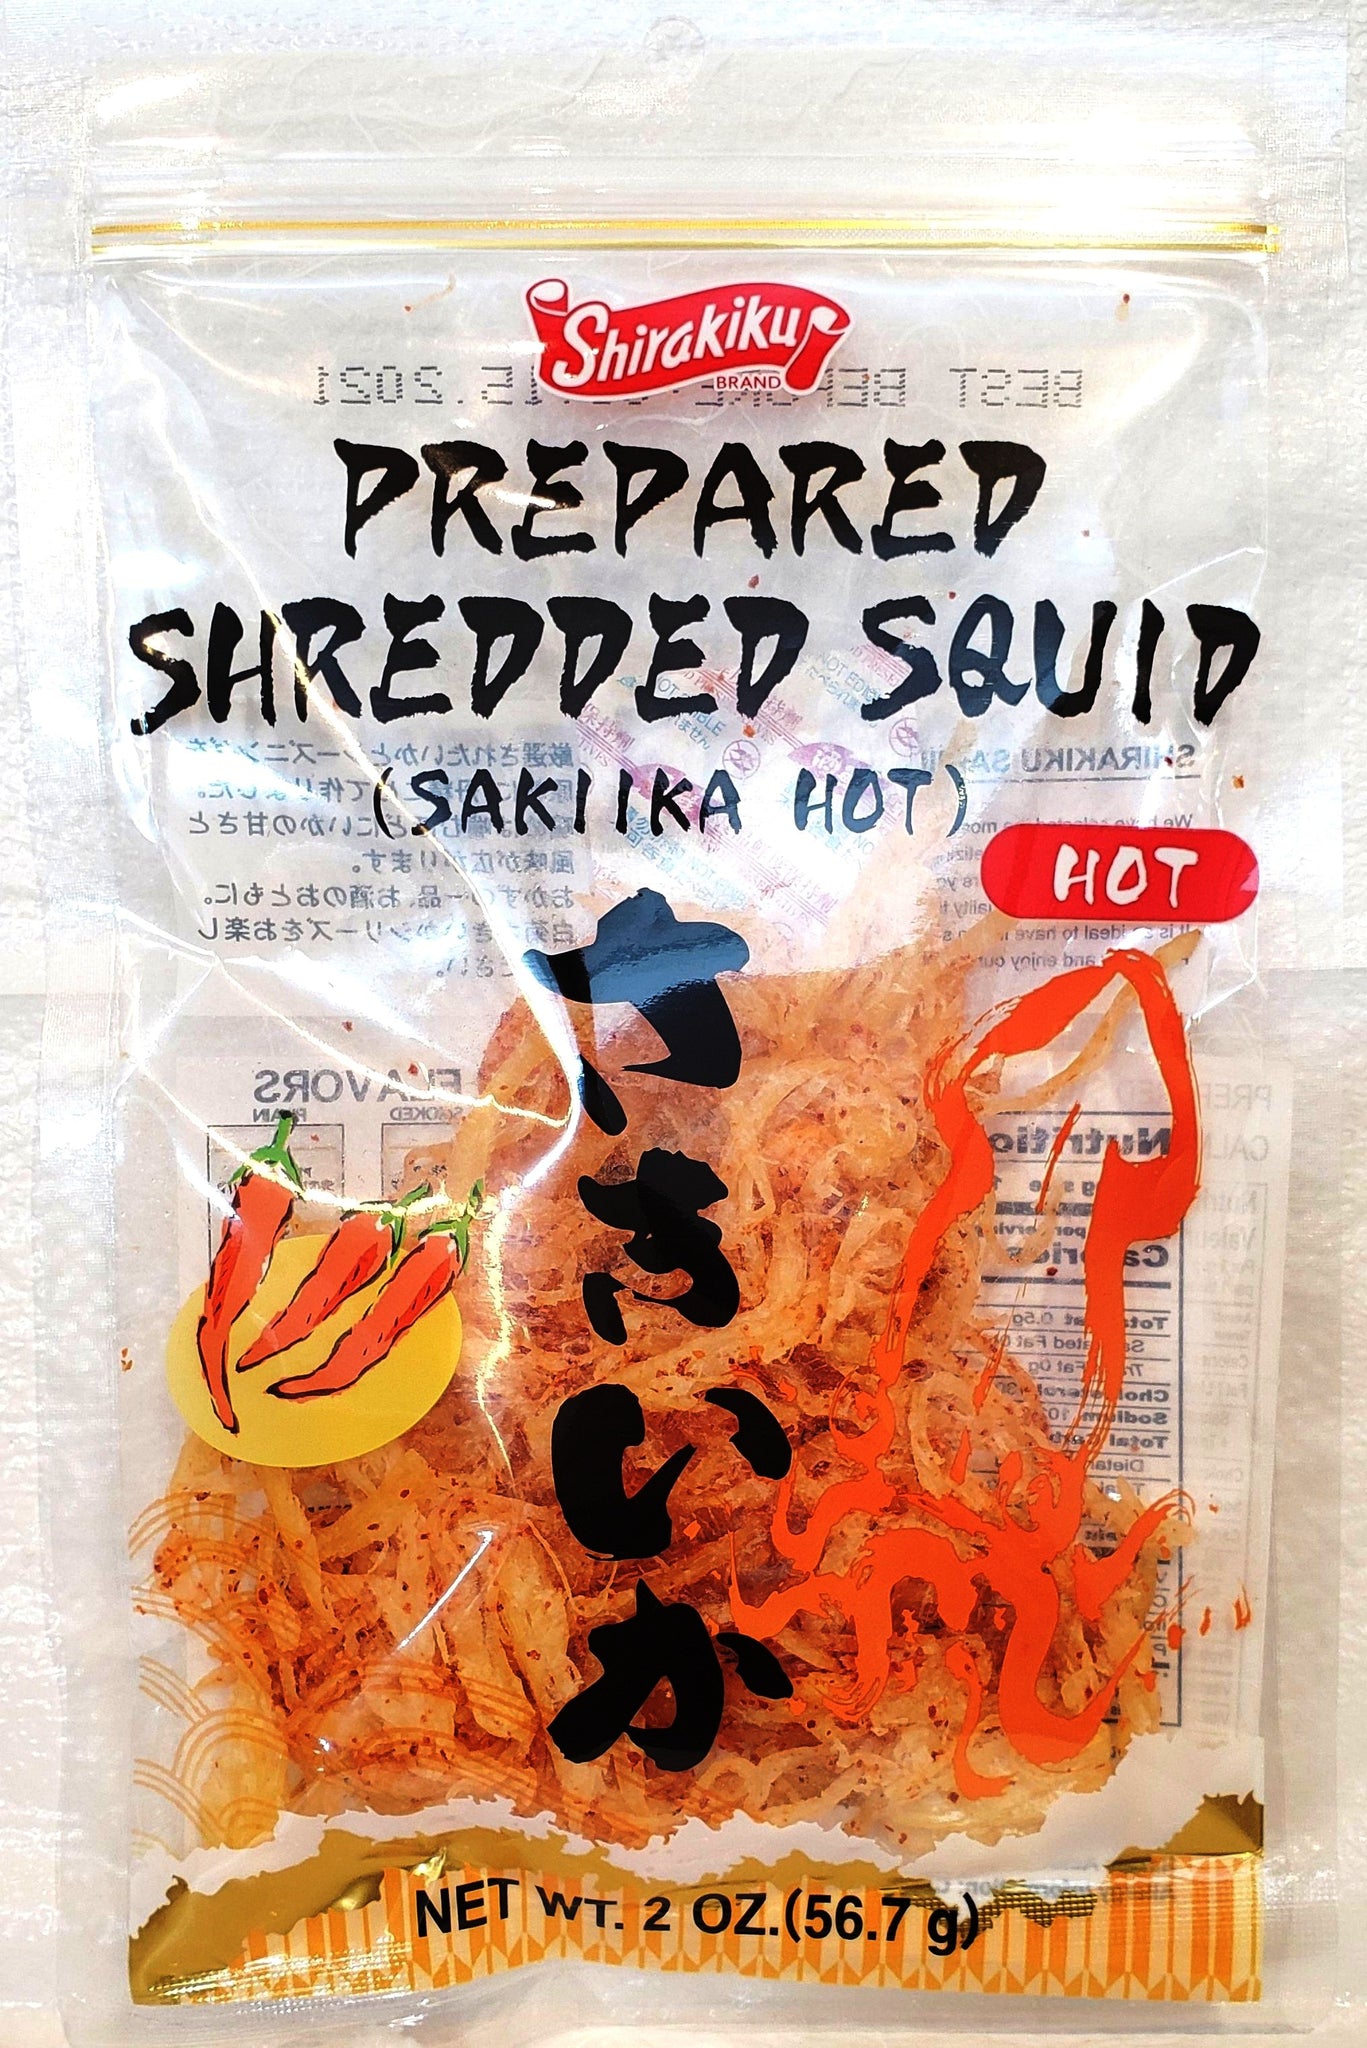 Shirakiku prepared shredded hot squid 白菊印烤辣魷魚𢇁